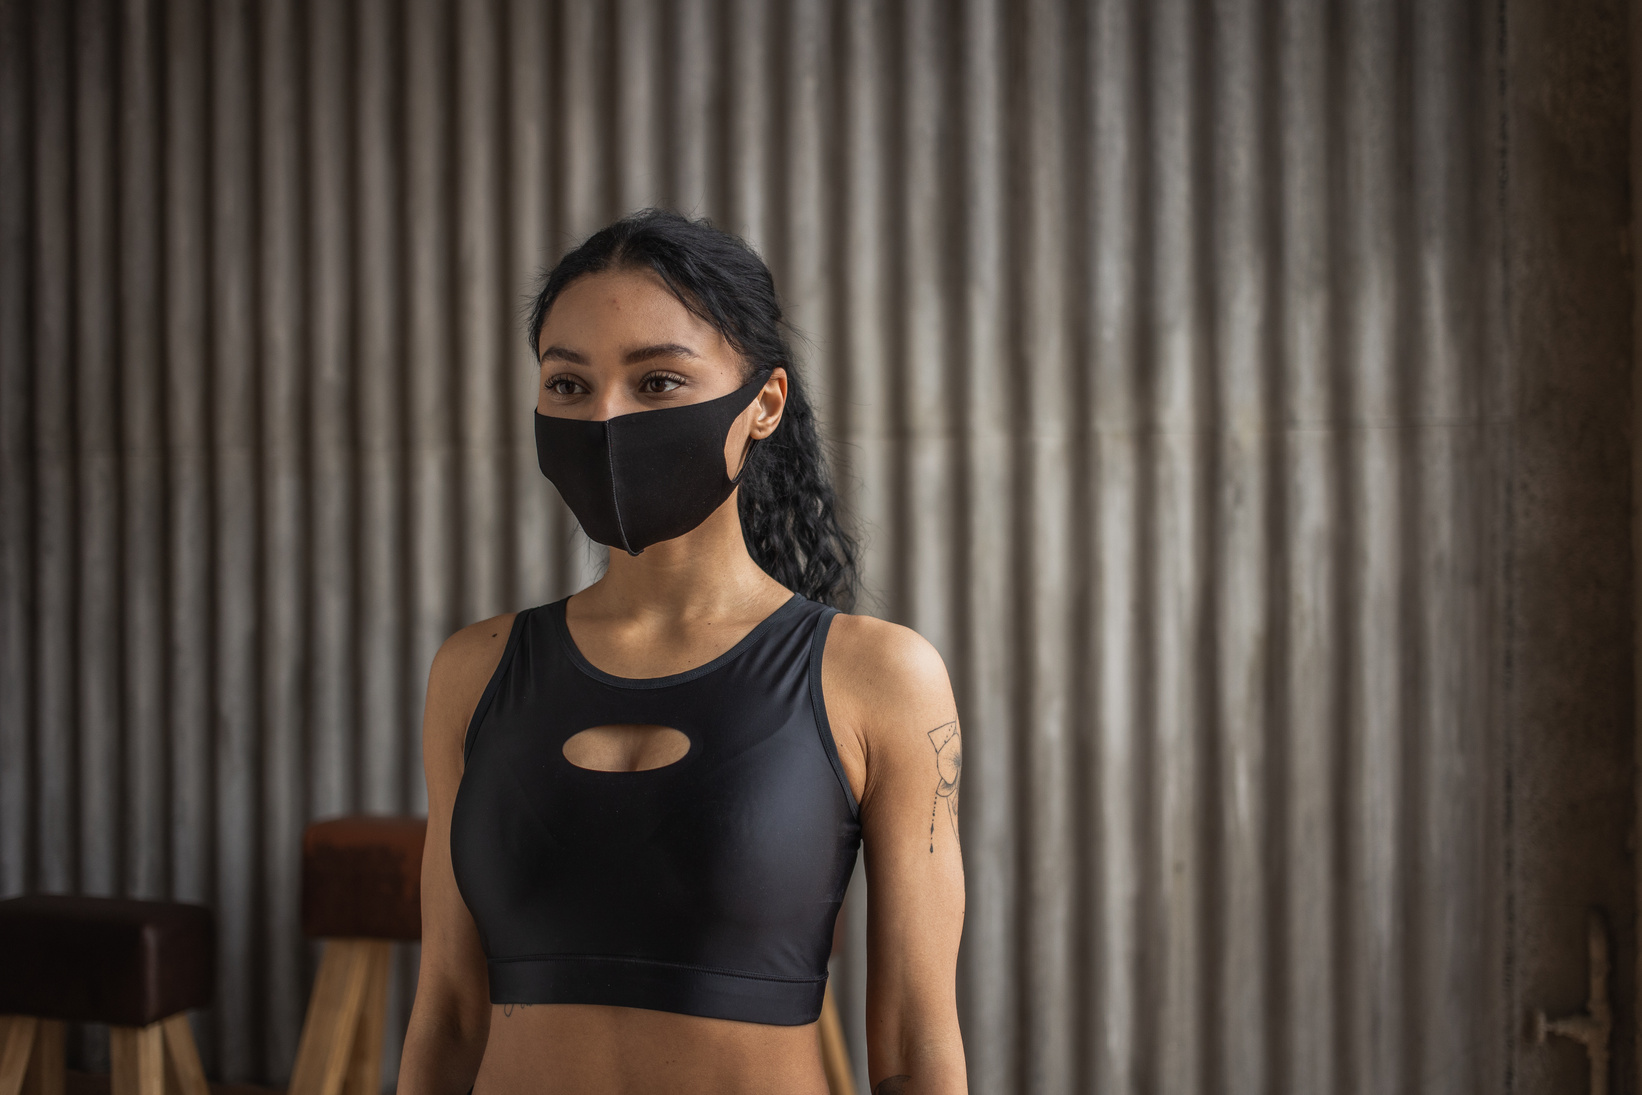 Black sportswoman in fabric mask in gym